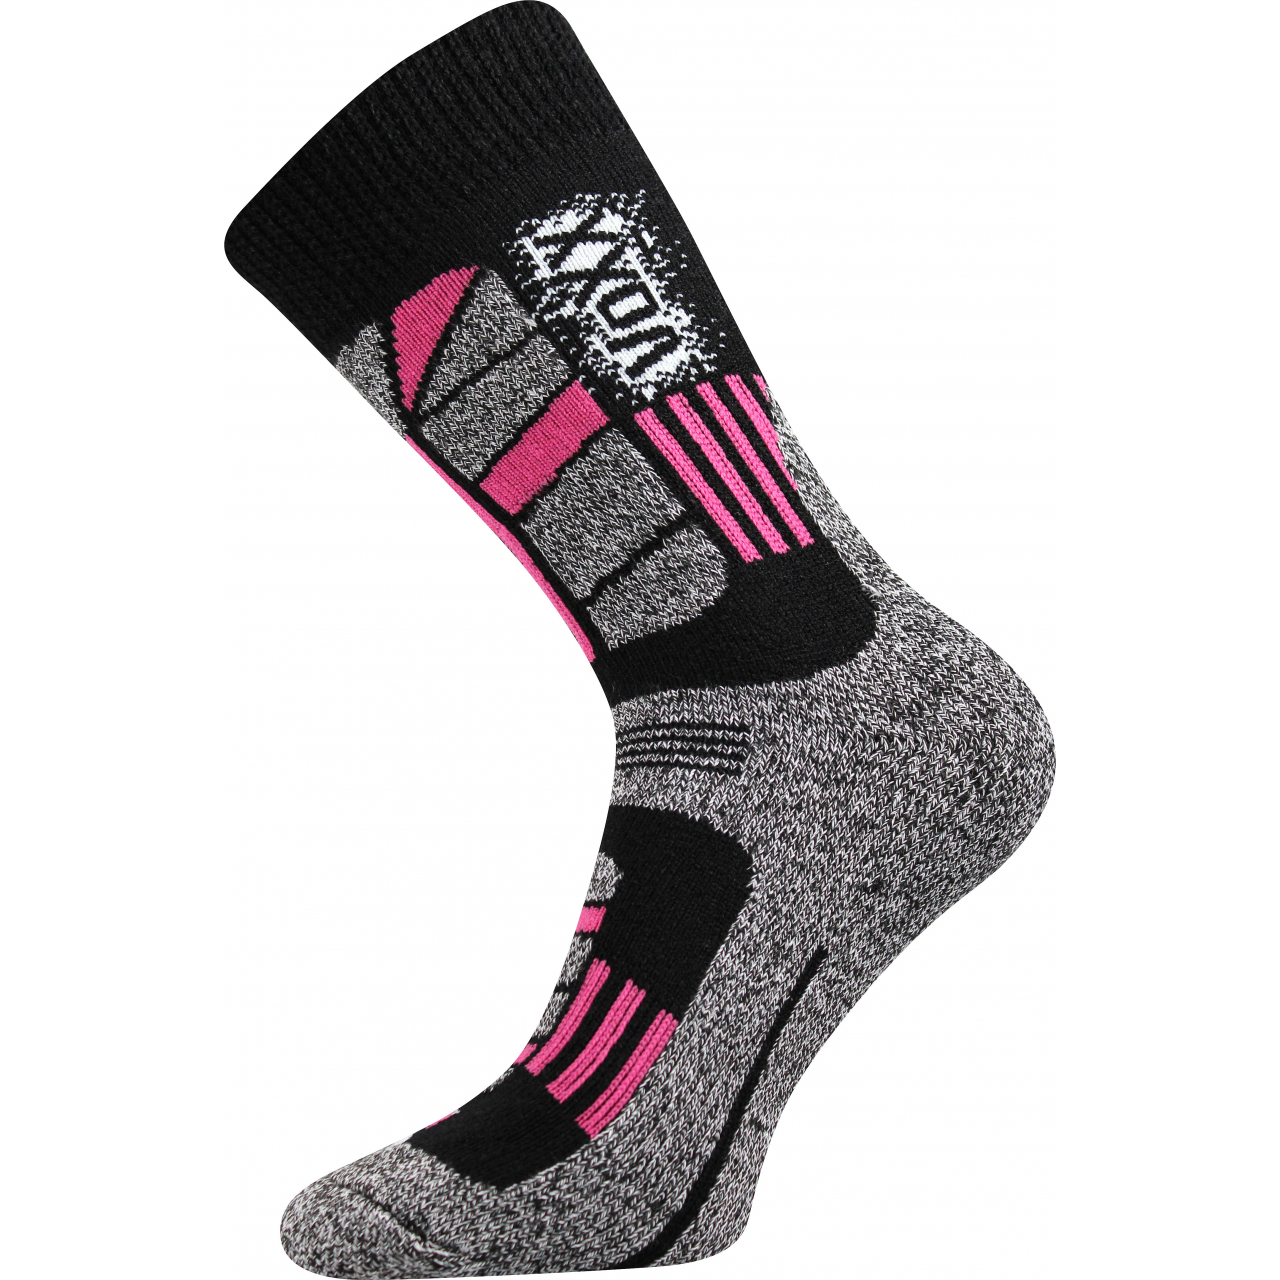 Ponožky unisex termo Voxx Traction I - černé-růžové, 39-42